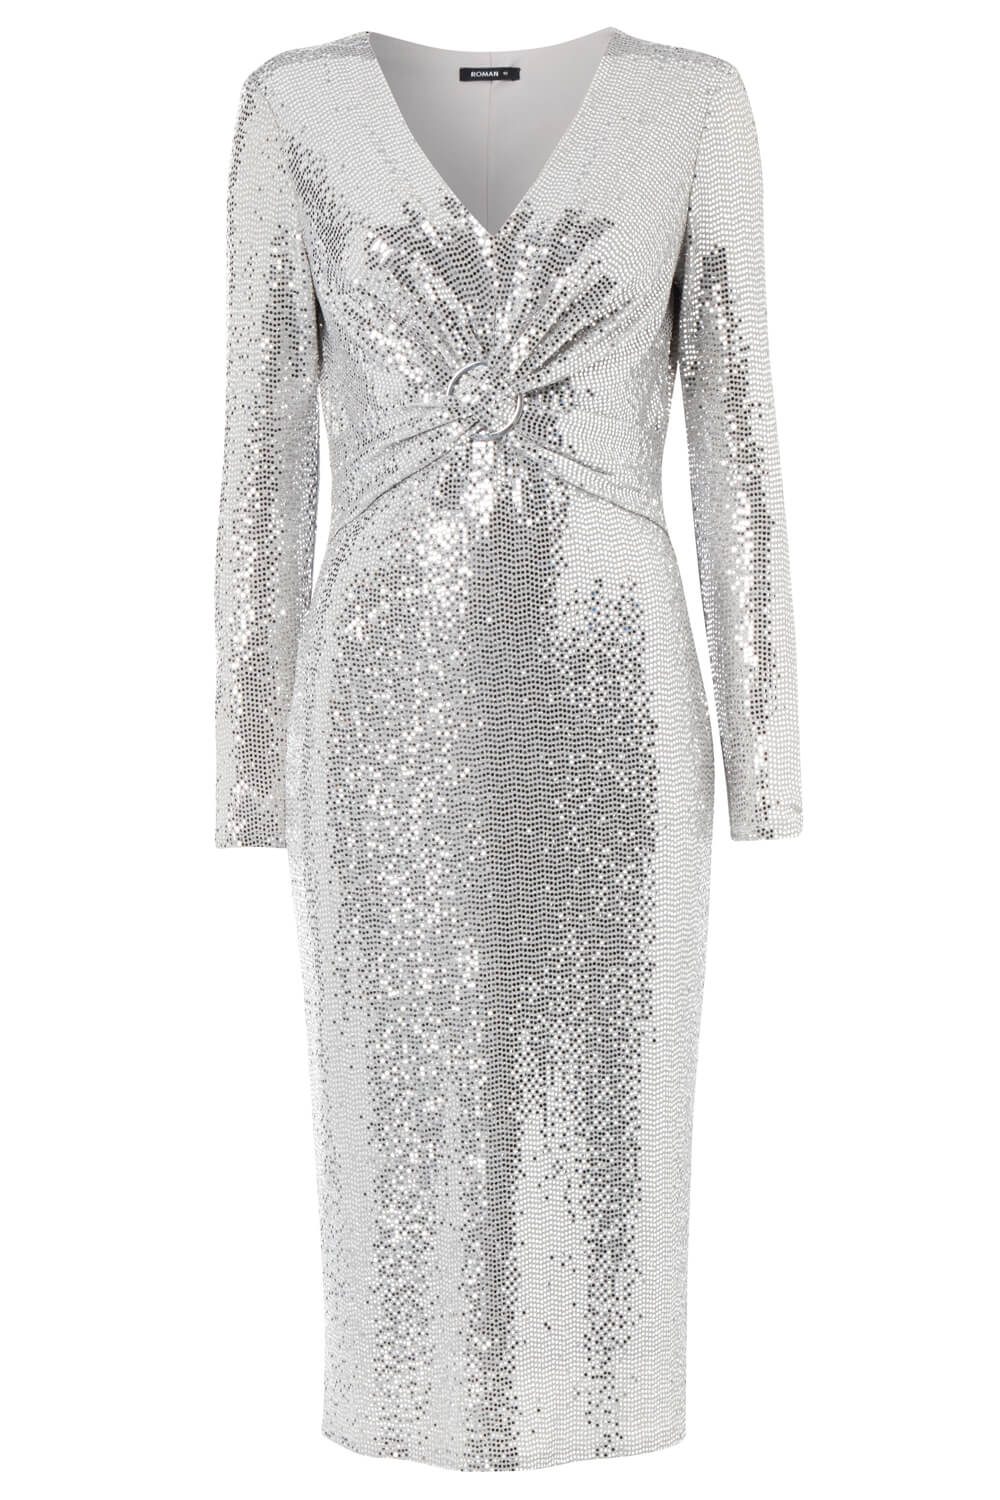 Silver Sparkle Twist Front Midi Dress, Image 3 of 3